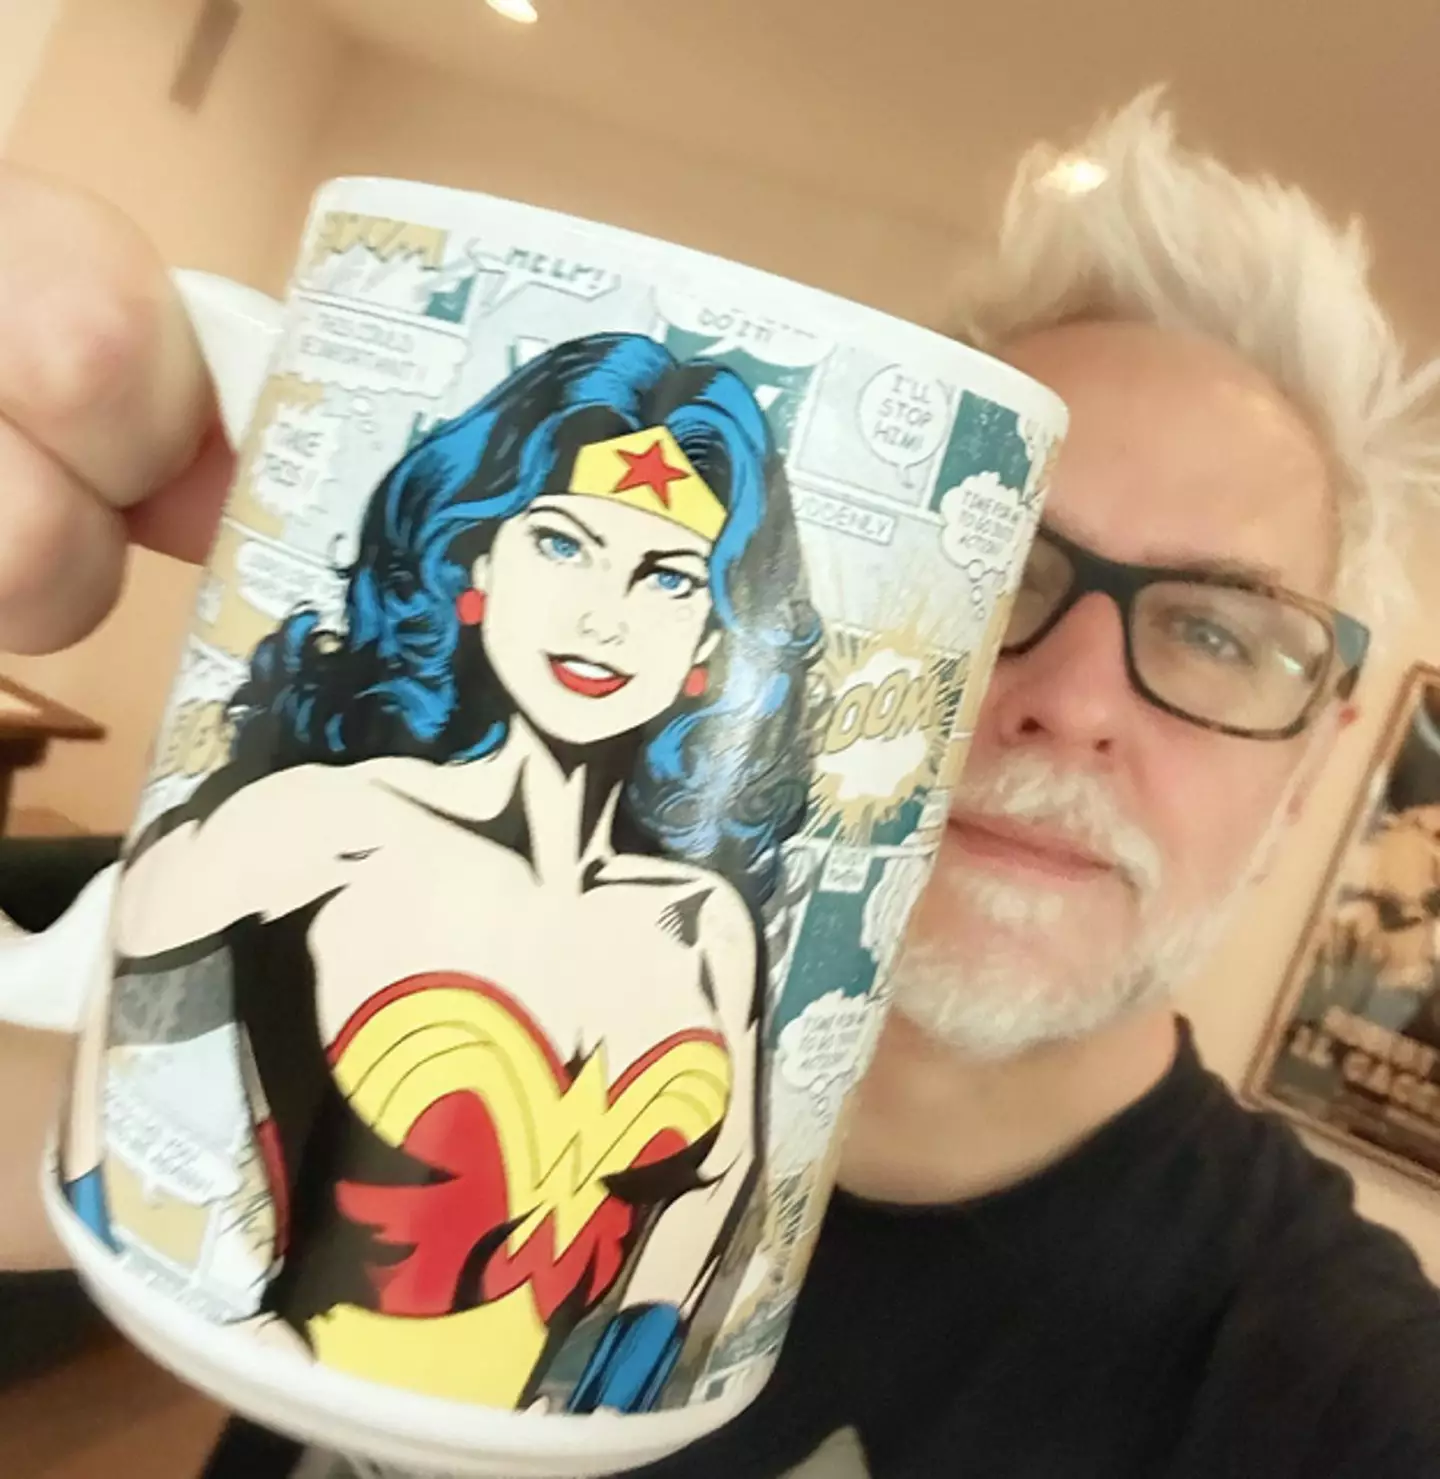 James Gunn holding a Wonder Woman mug.